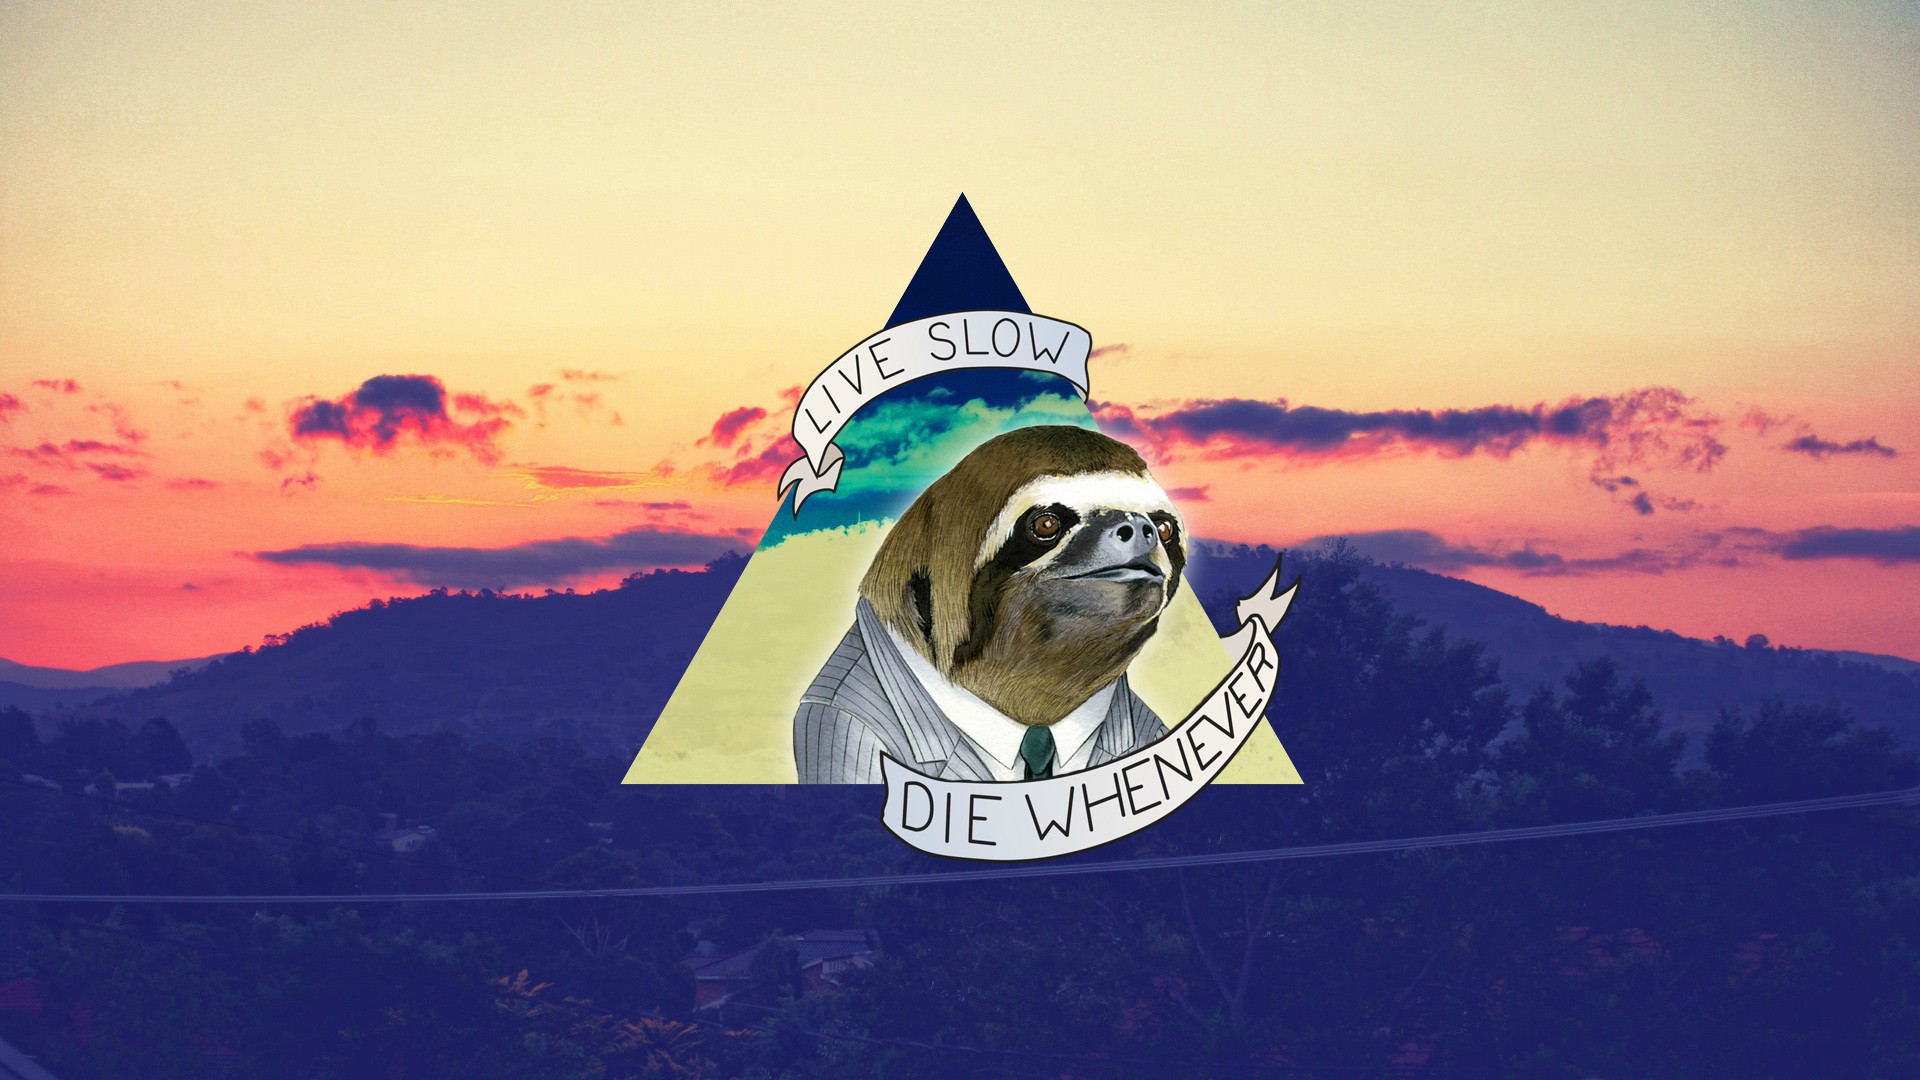 sloth background - F Slow Tve Uflins Die Wa